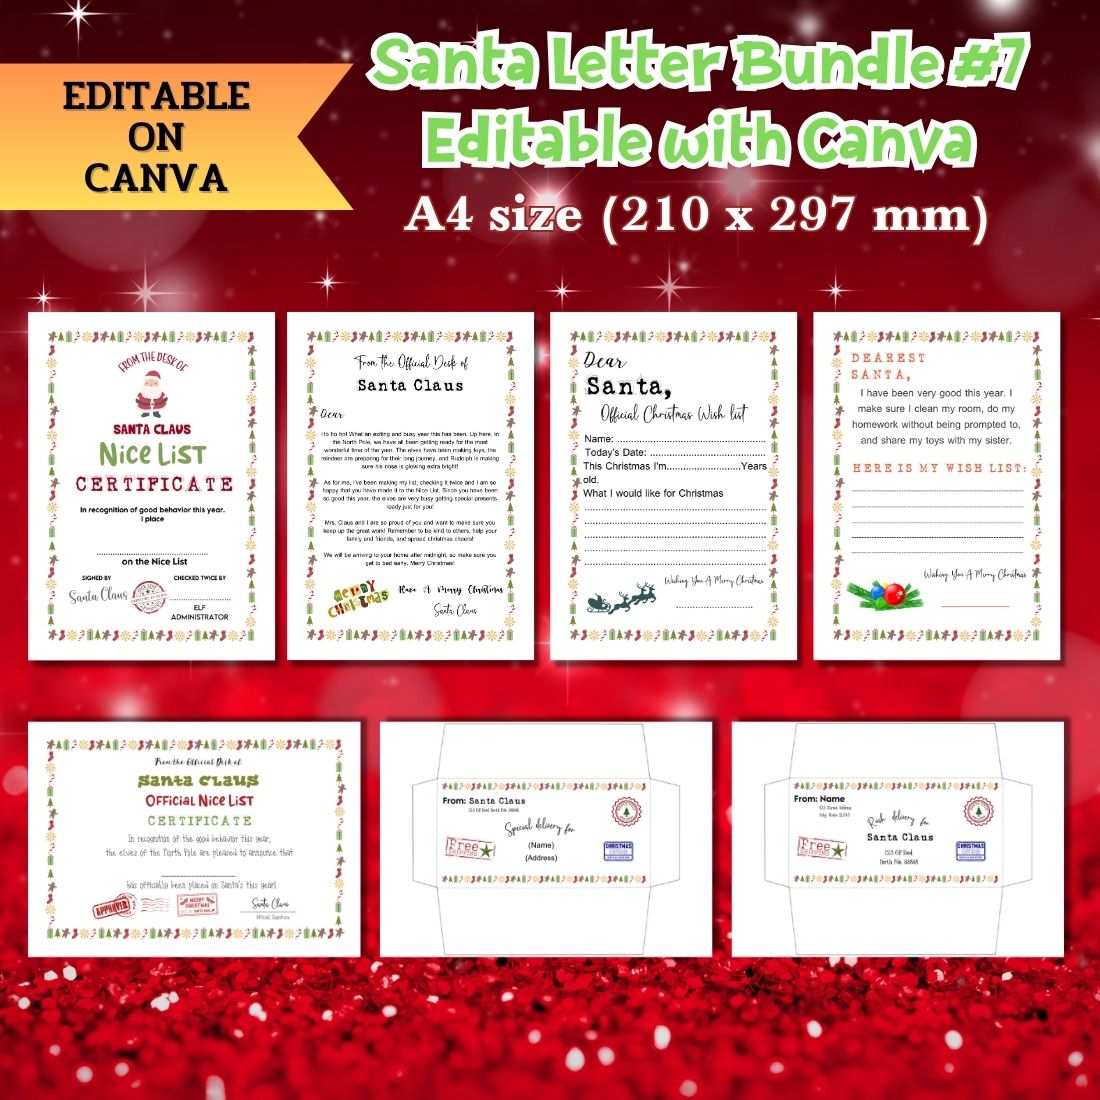 Santa Letter Bunble | Editable by Canva cover image.